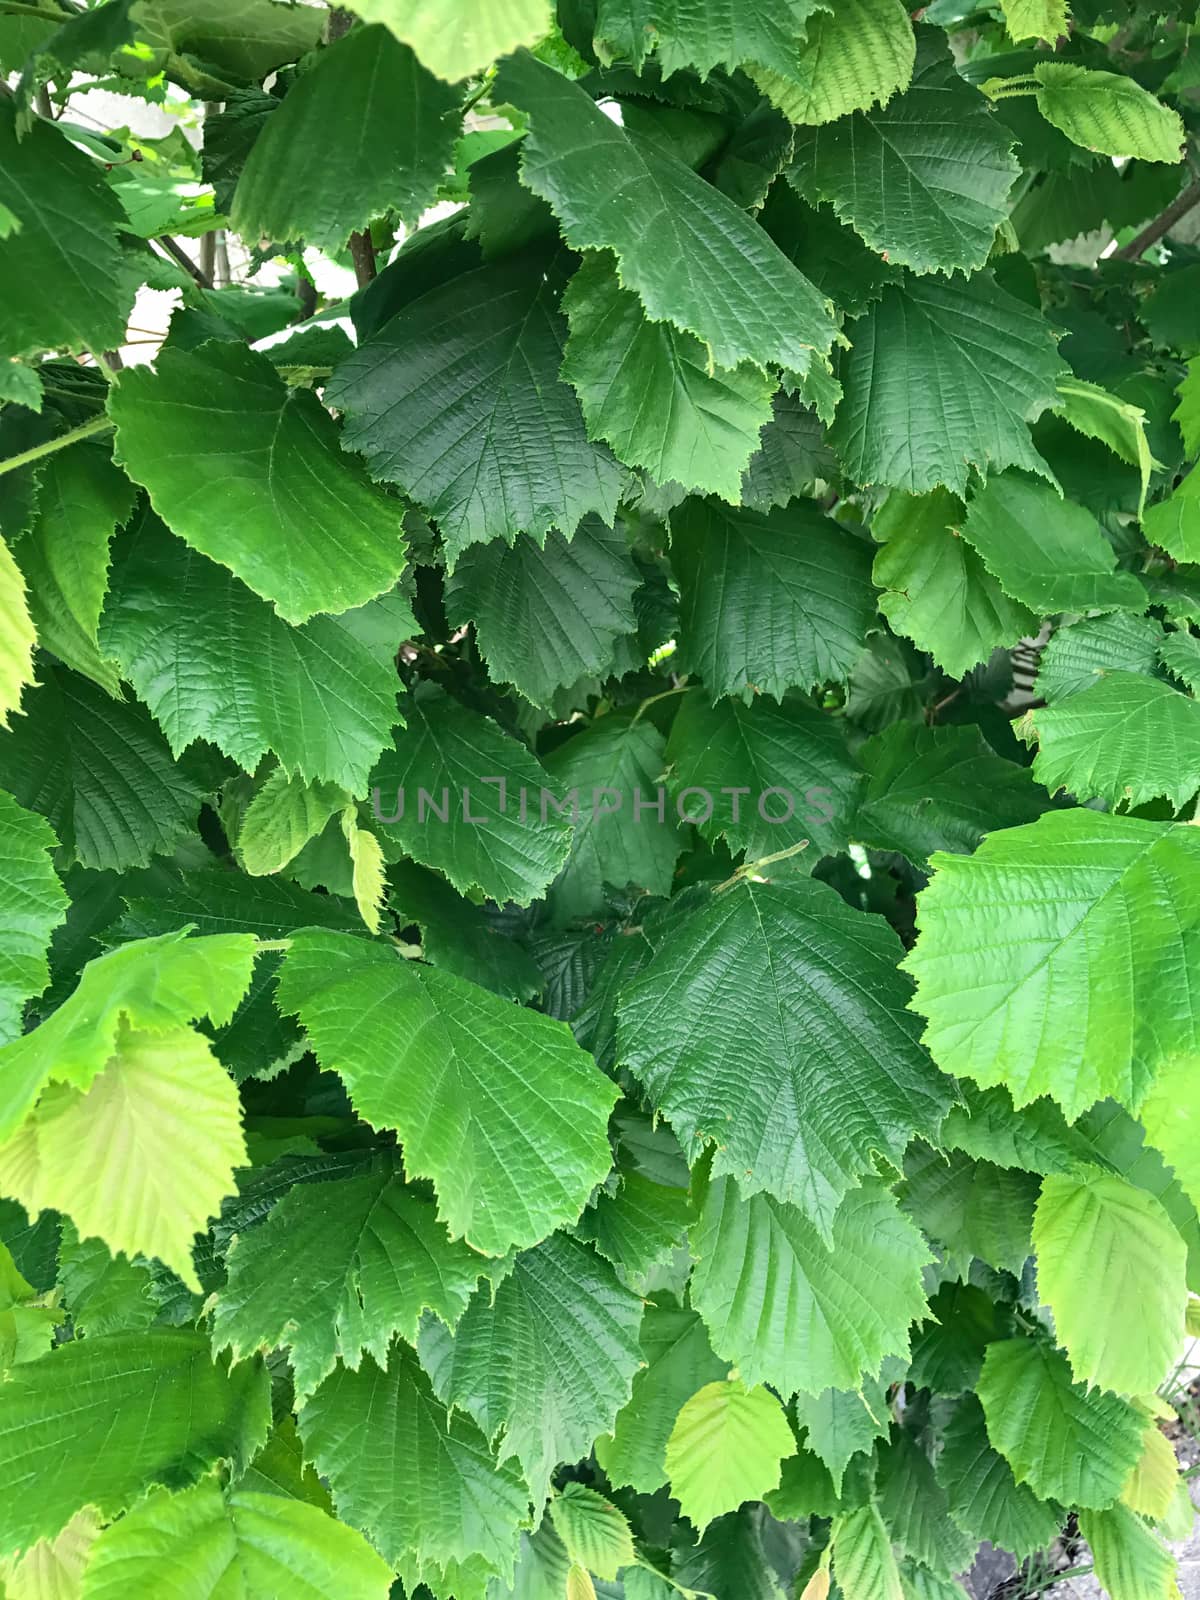 hazelnut tree and leaves by crazymedia007